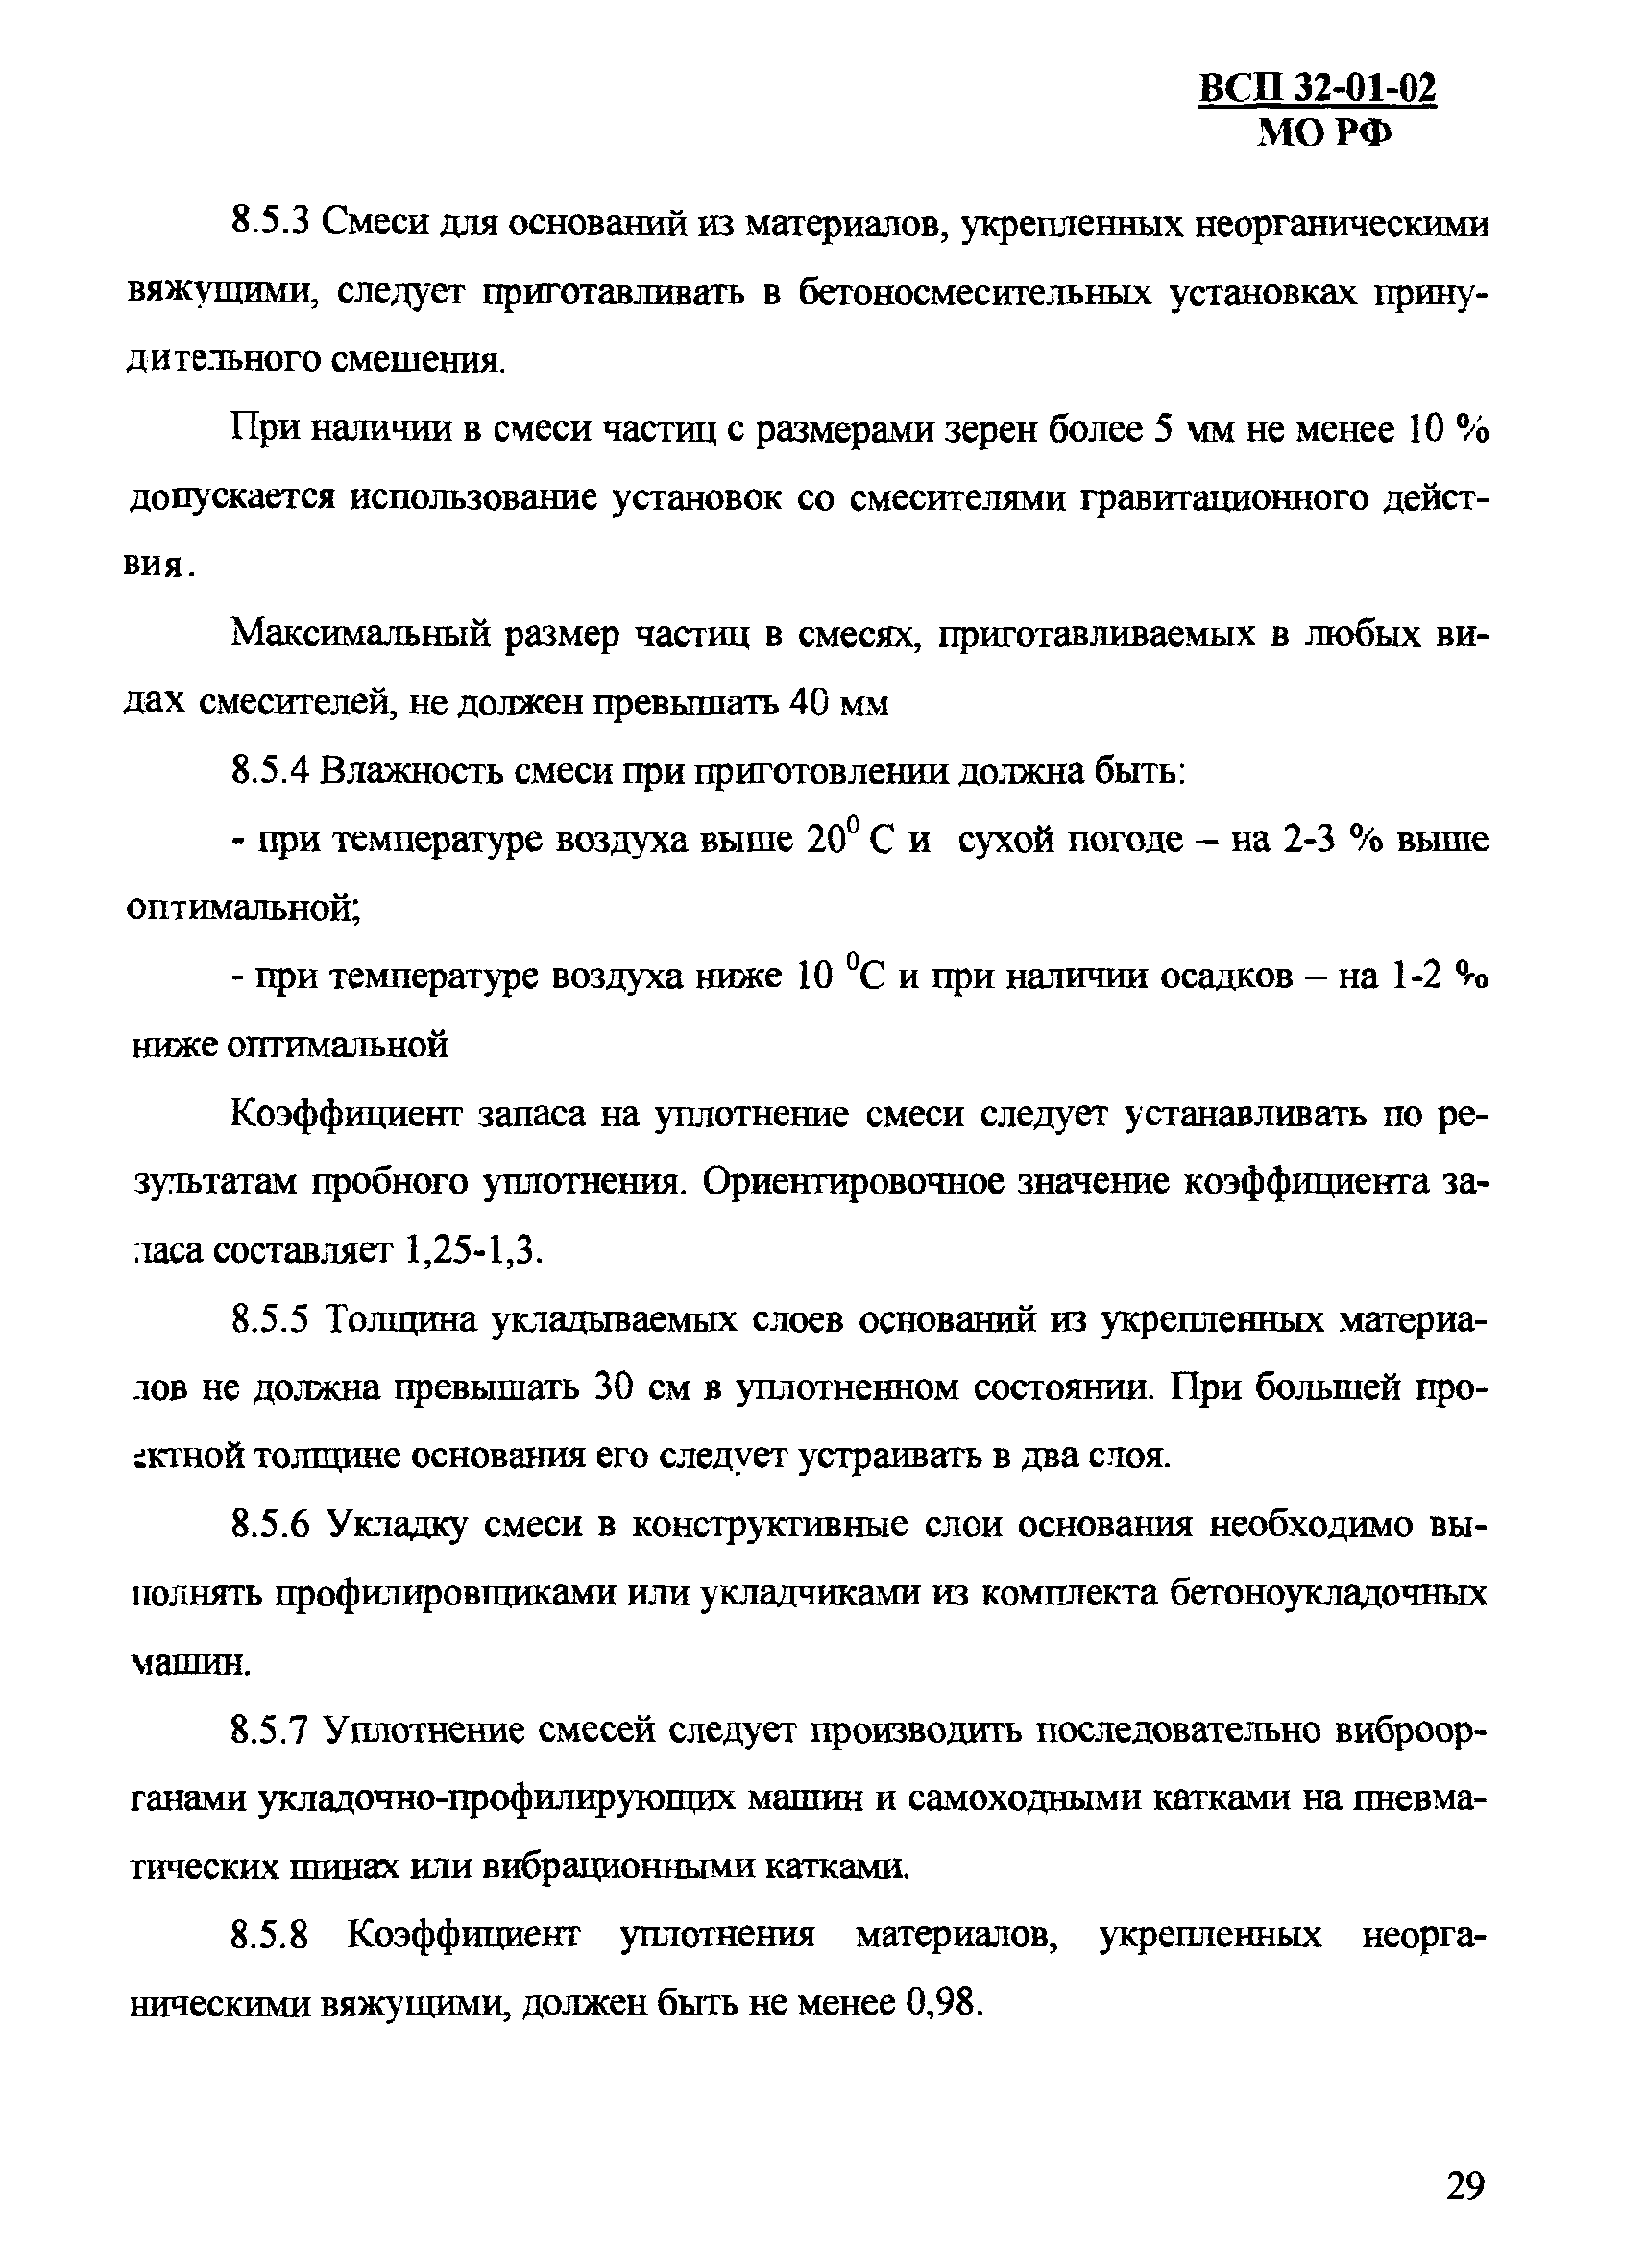 ВСП 32-01-02/МО РФ